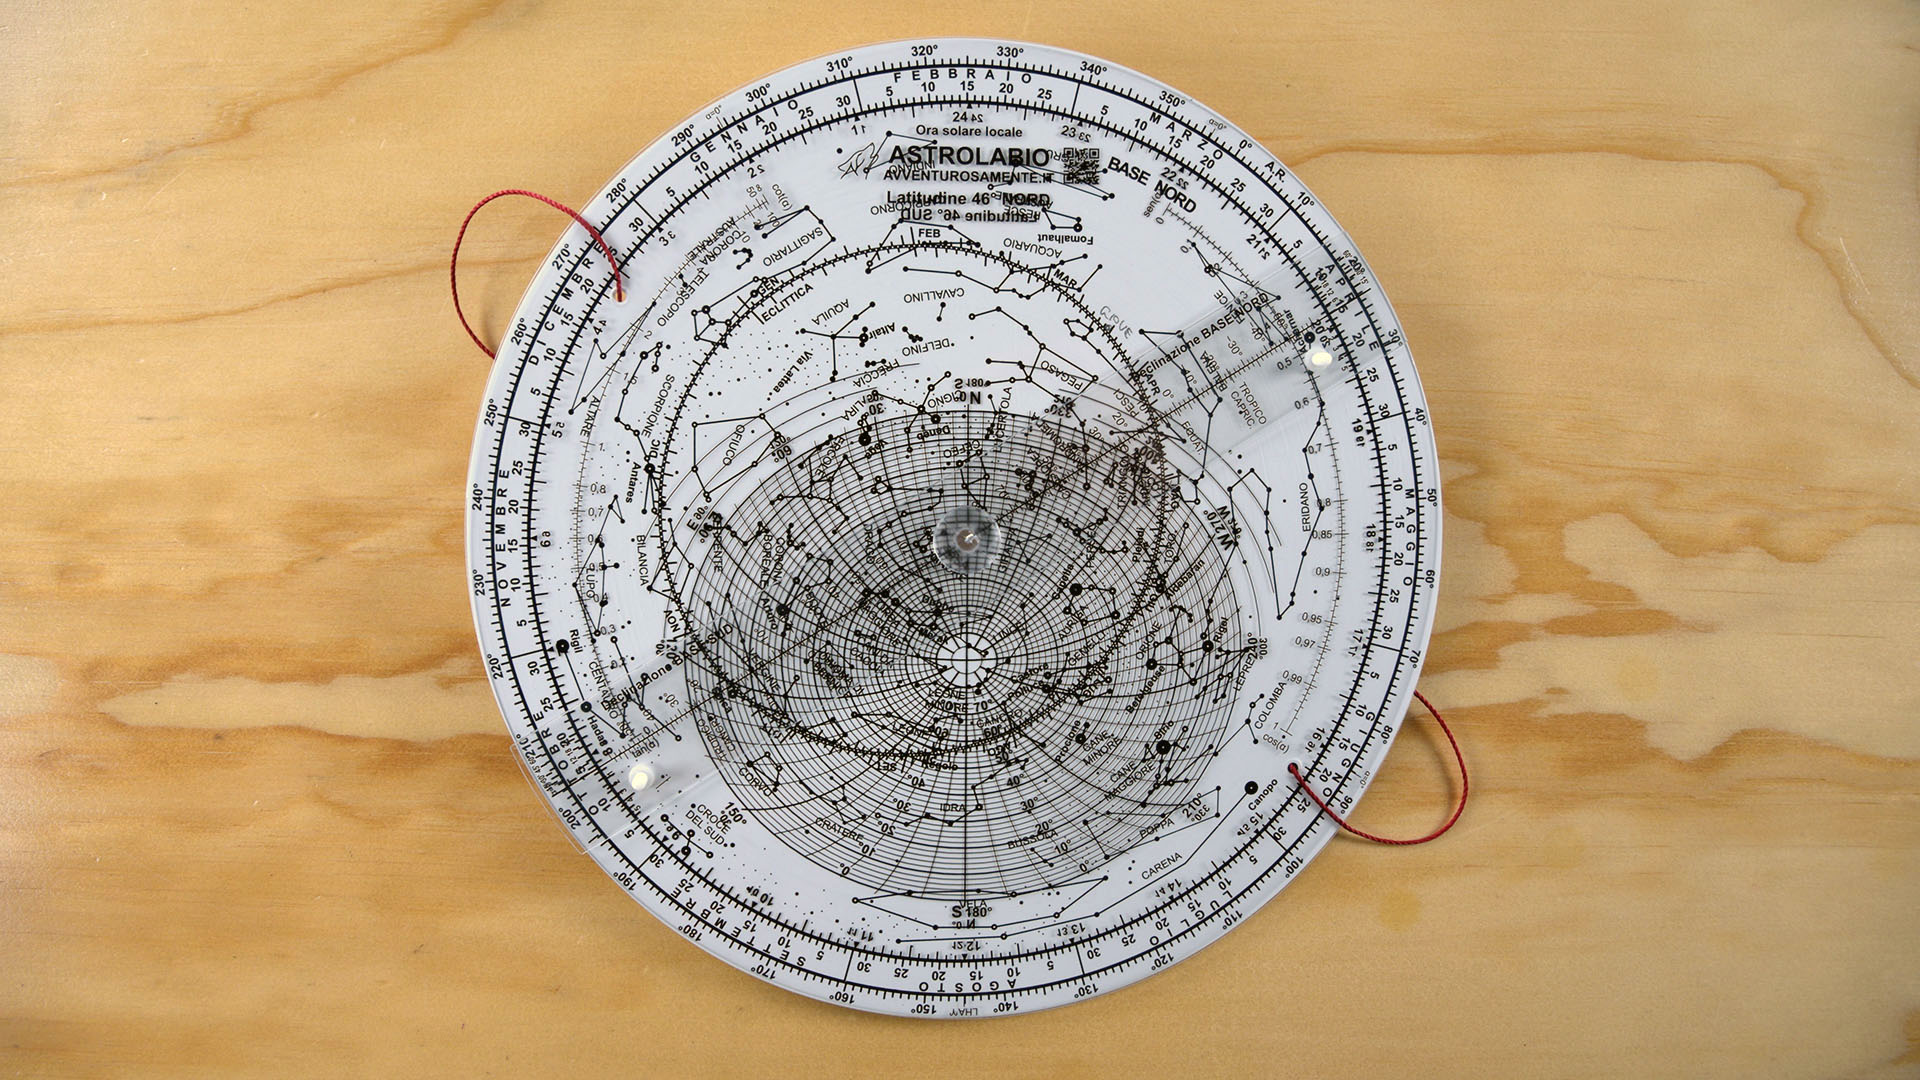 Astrolabio di Avventurosamente